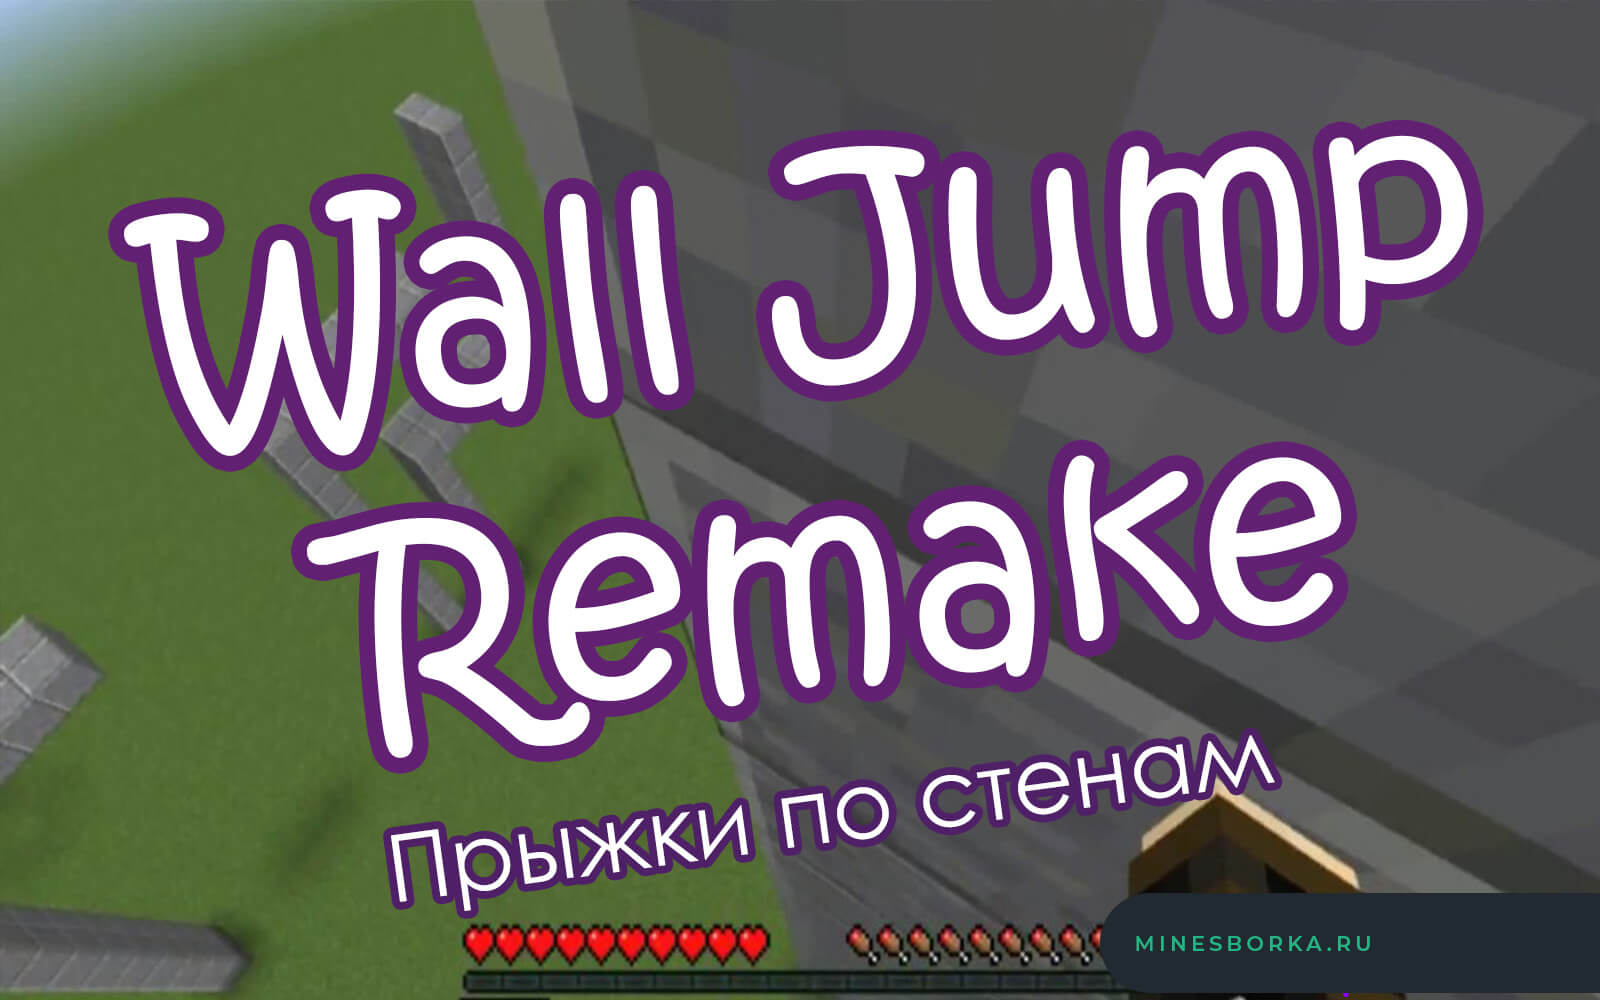 Скачать мод Wall Jump Remake для майнкрафт | Прыжки по стенам